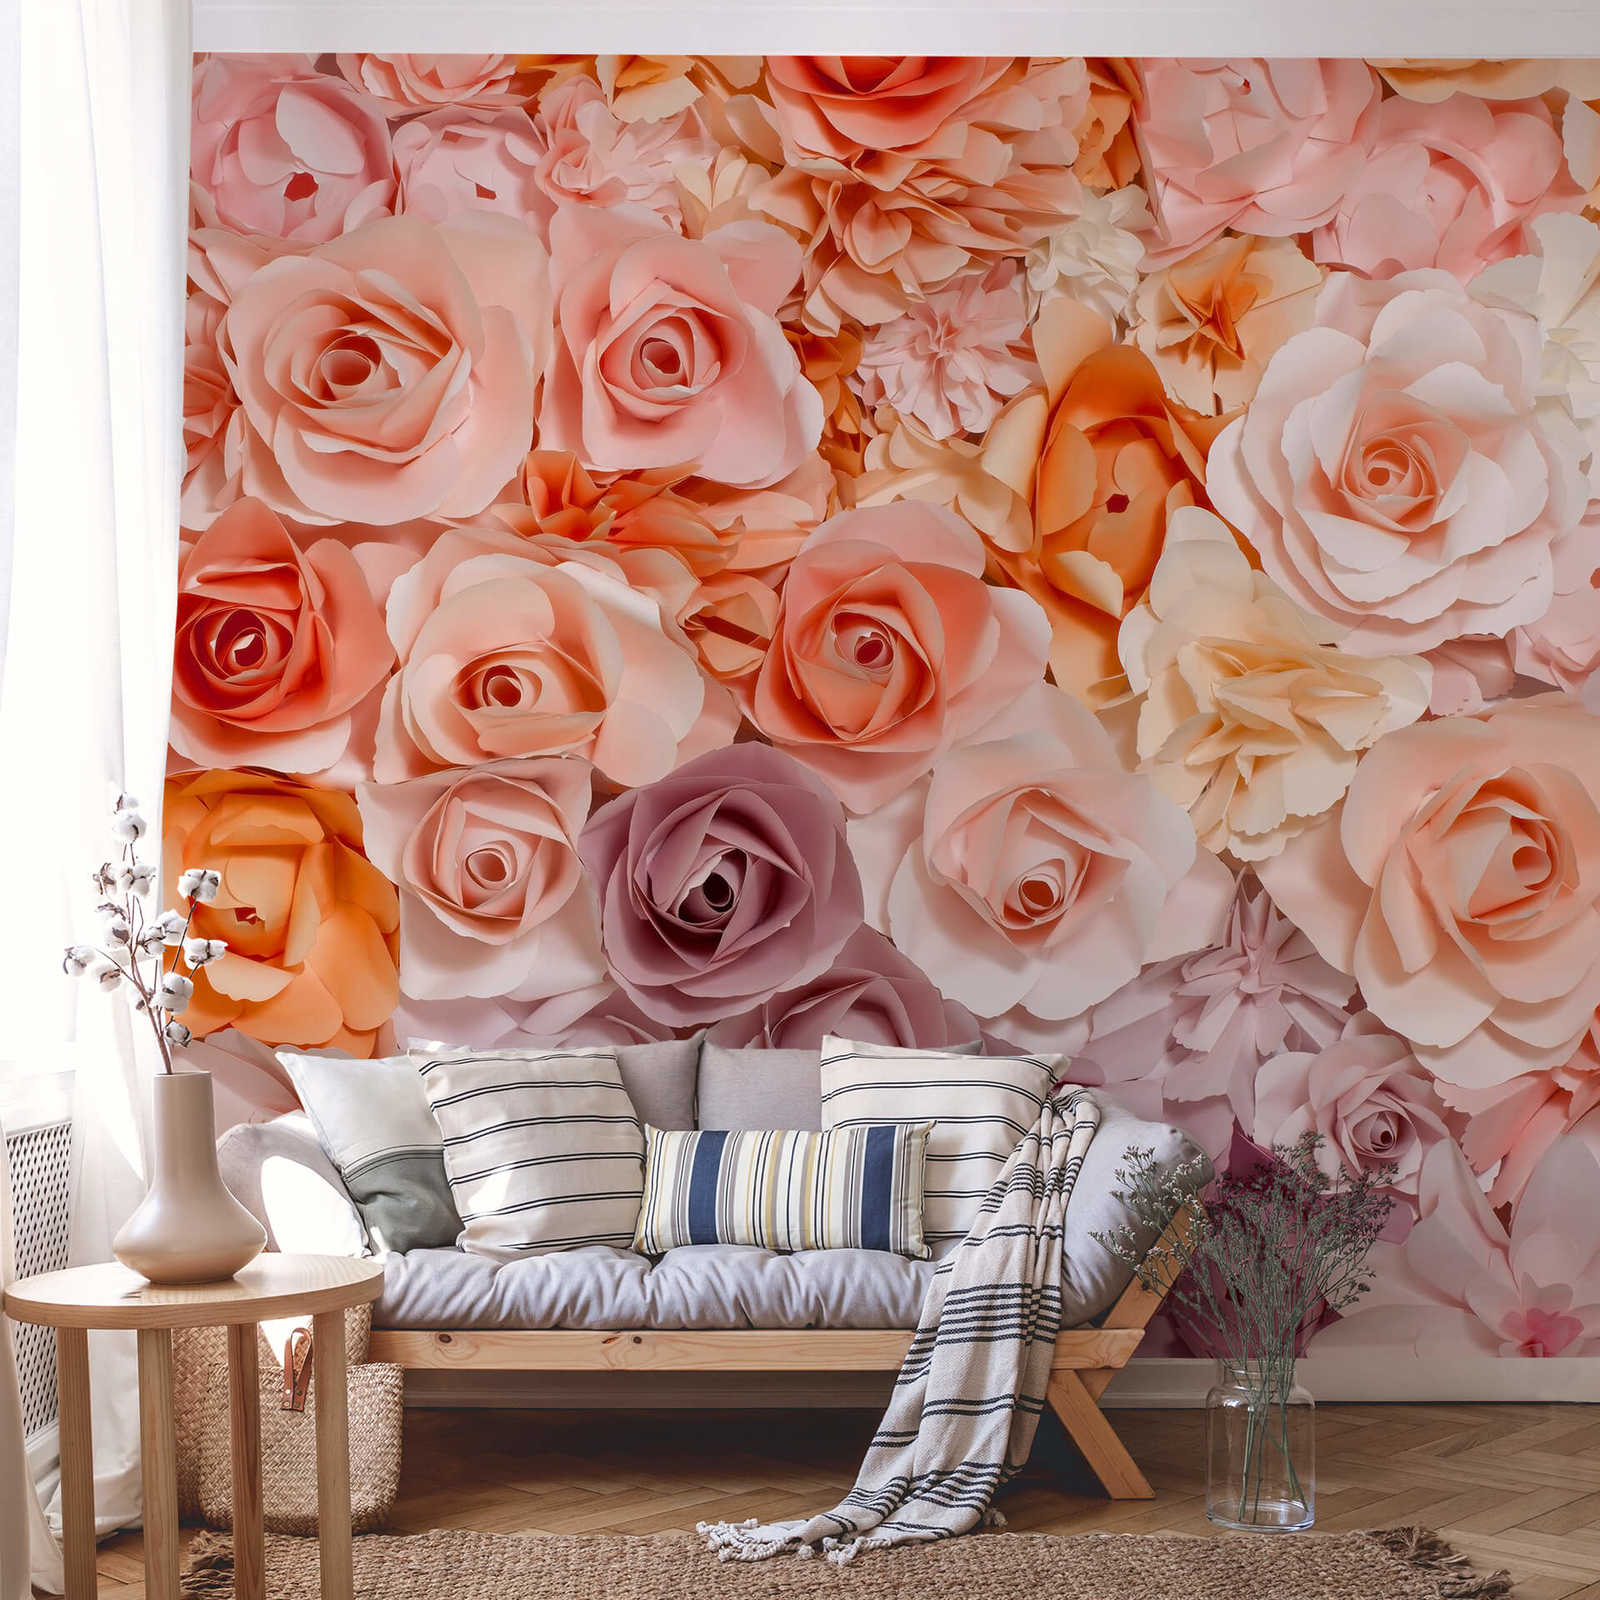             Roses mural 3D floral pattern - pink, white, orange
        